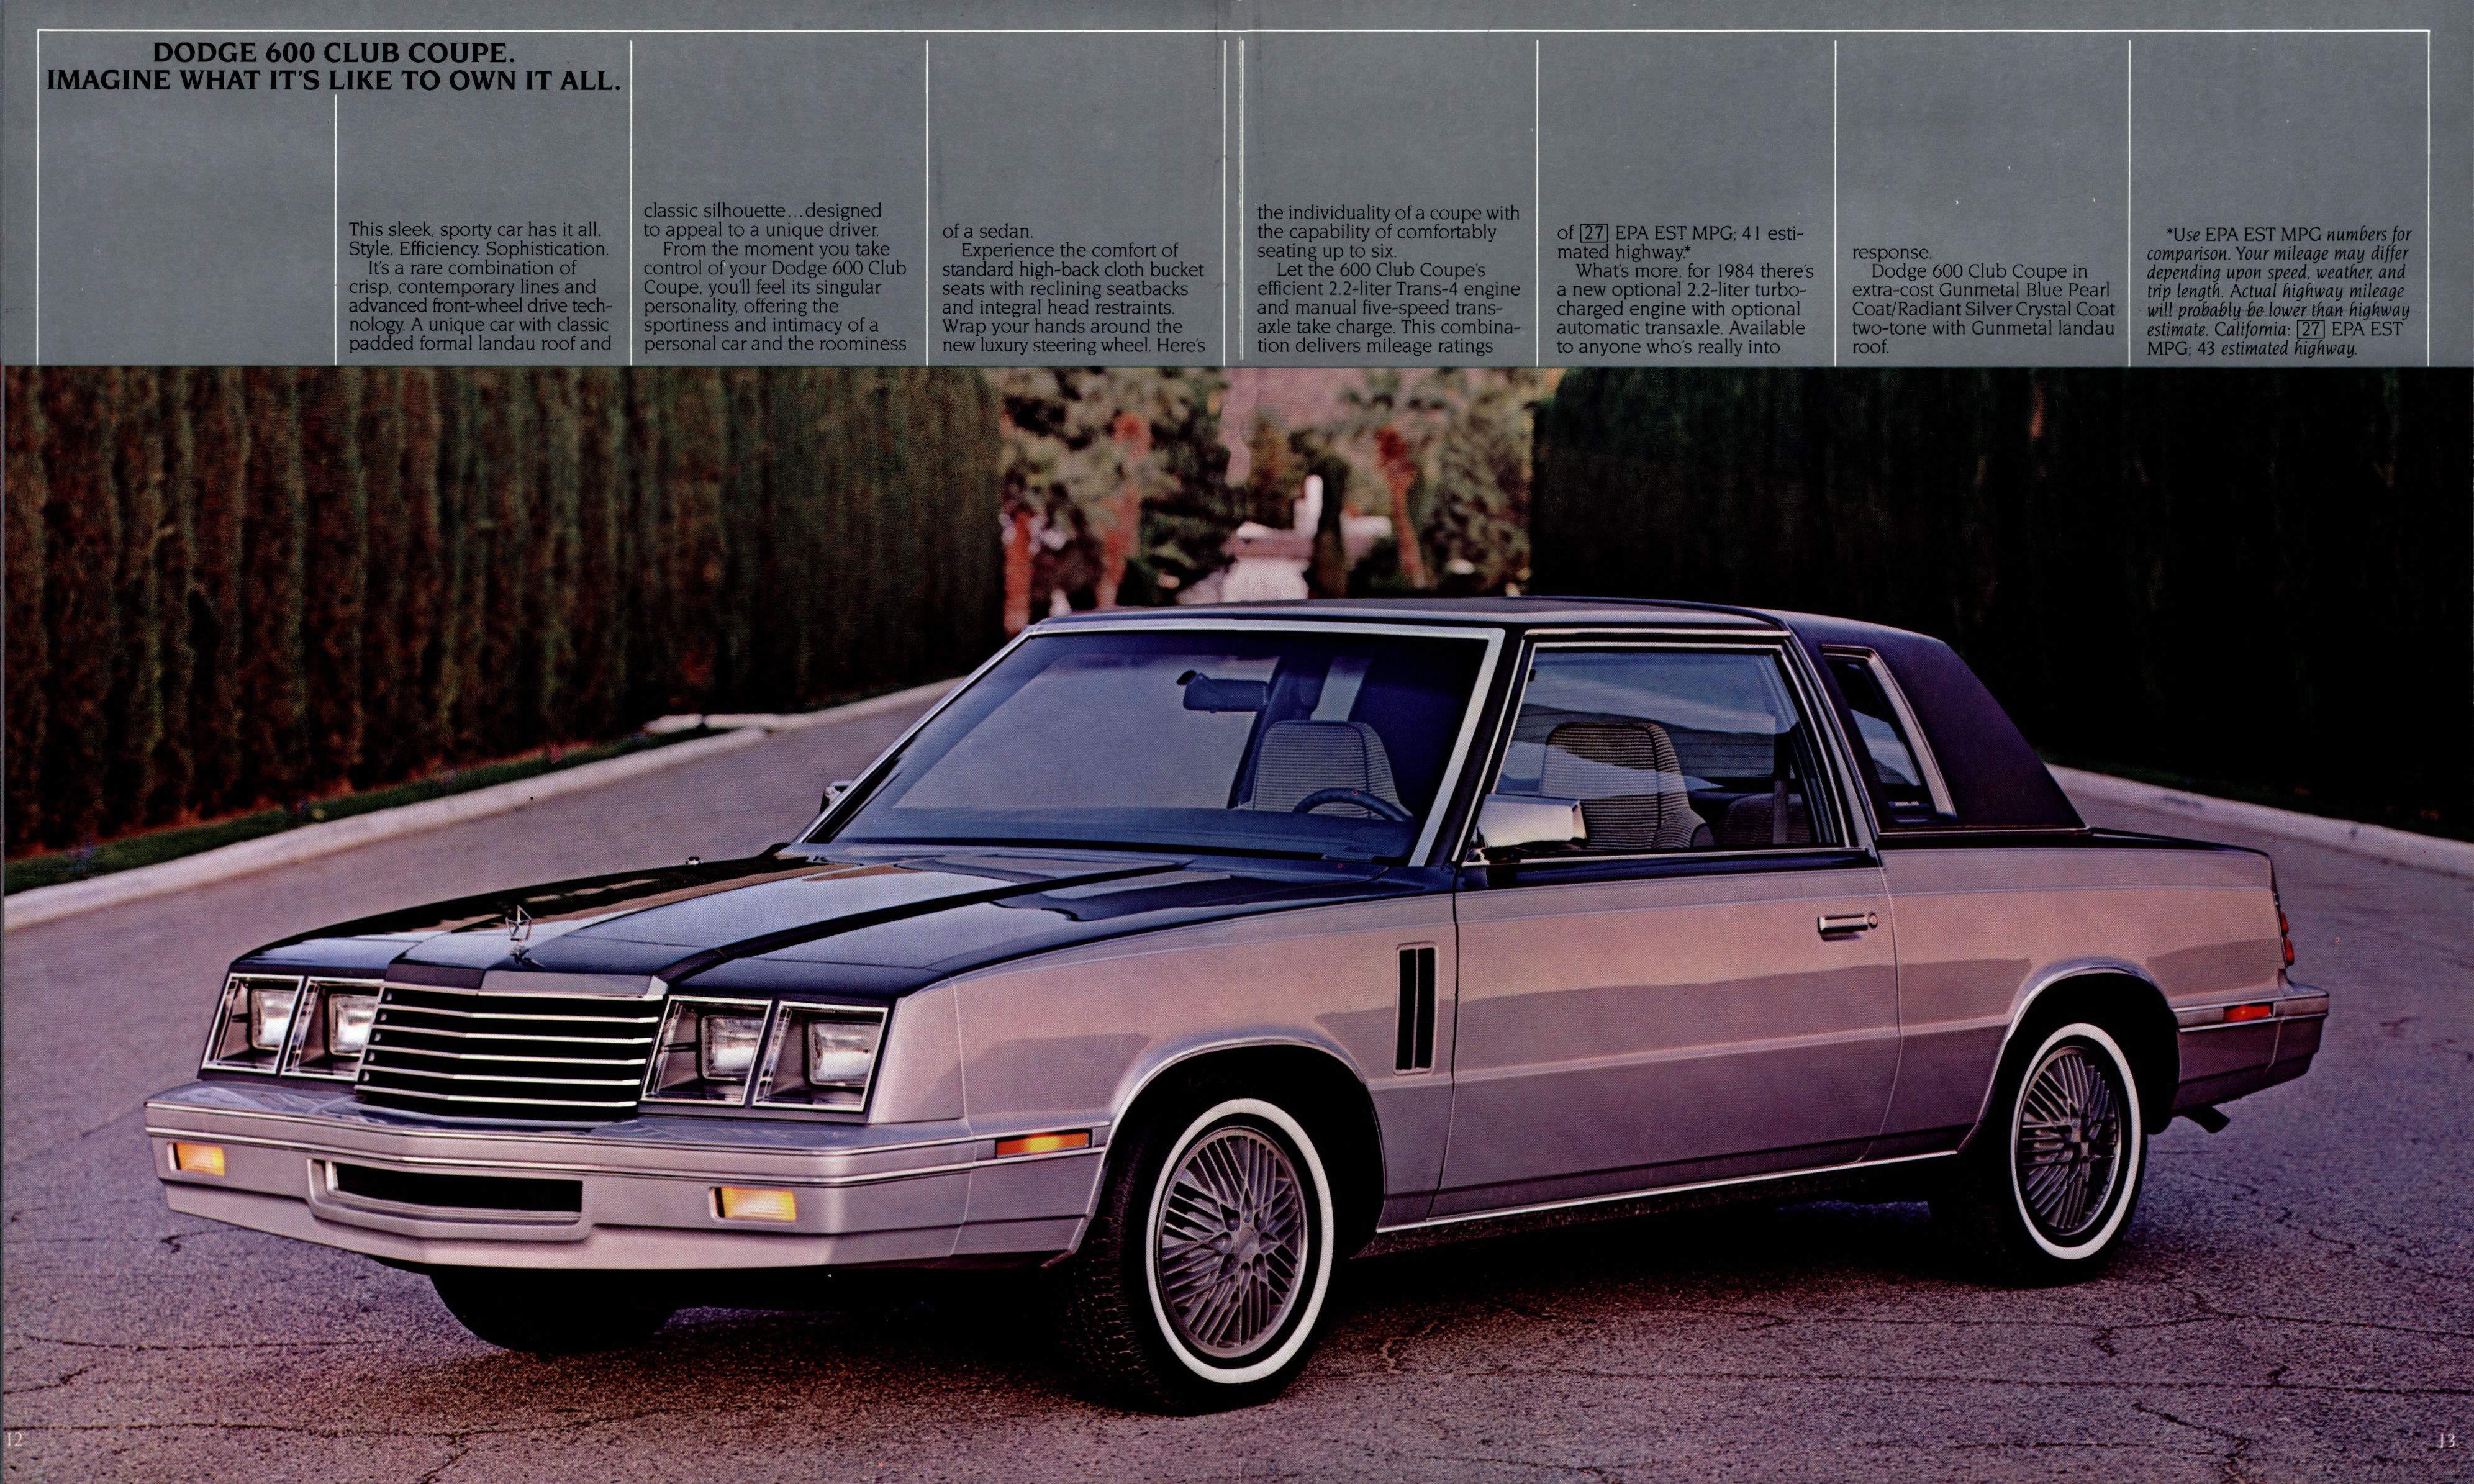 1984 Dodge 600 Series Convertible Club Coupe Four-Door Sedan Sales Brochure 